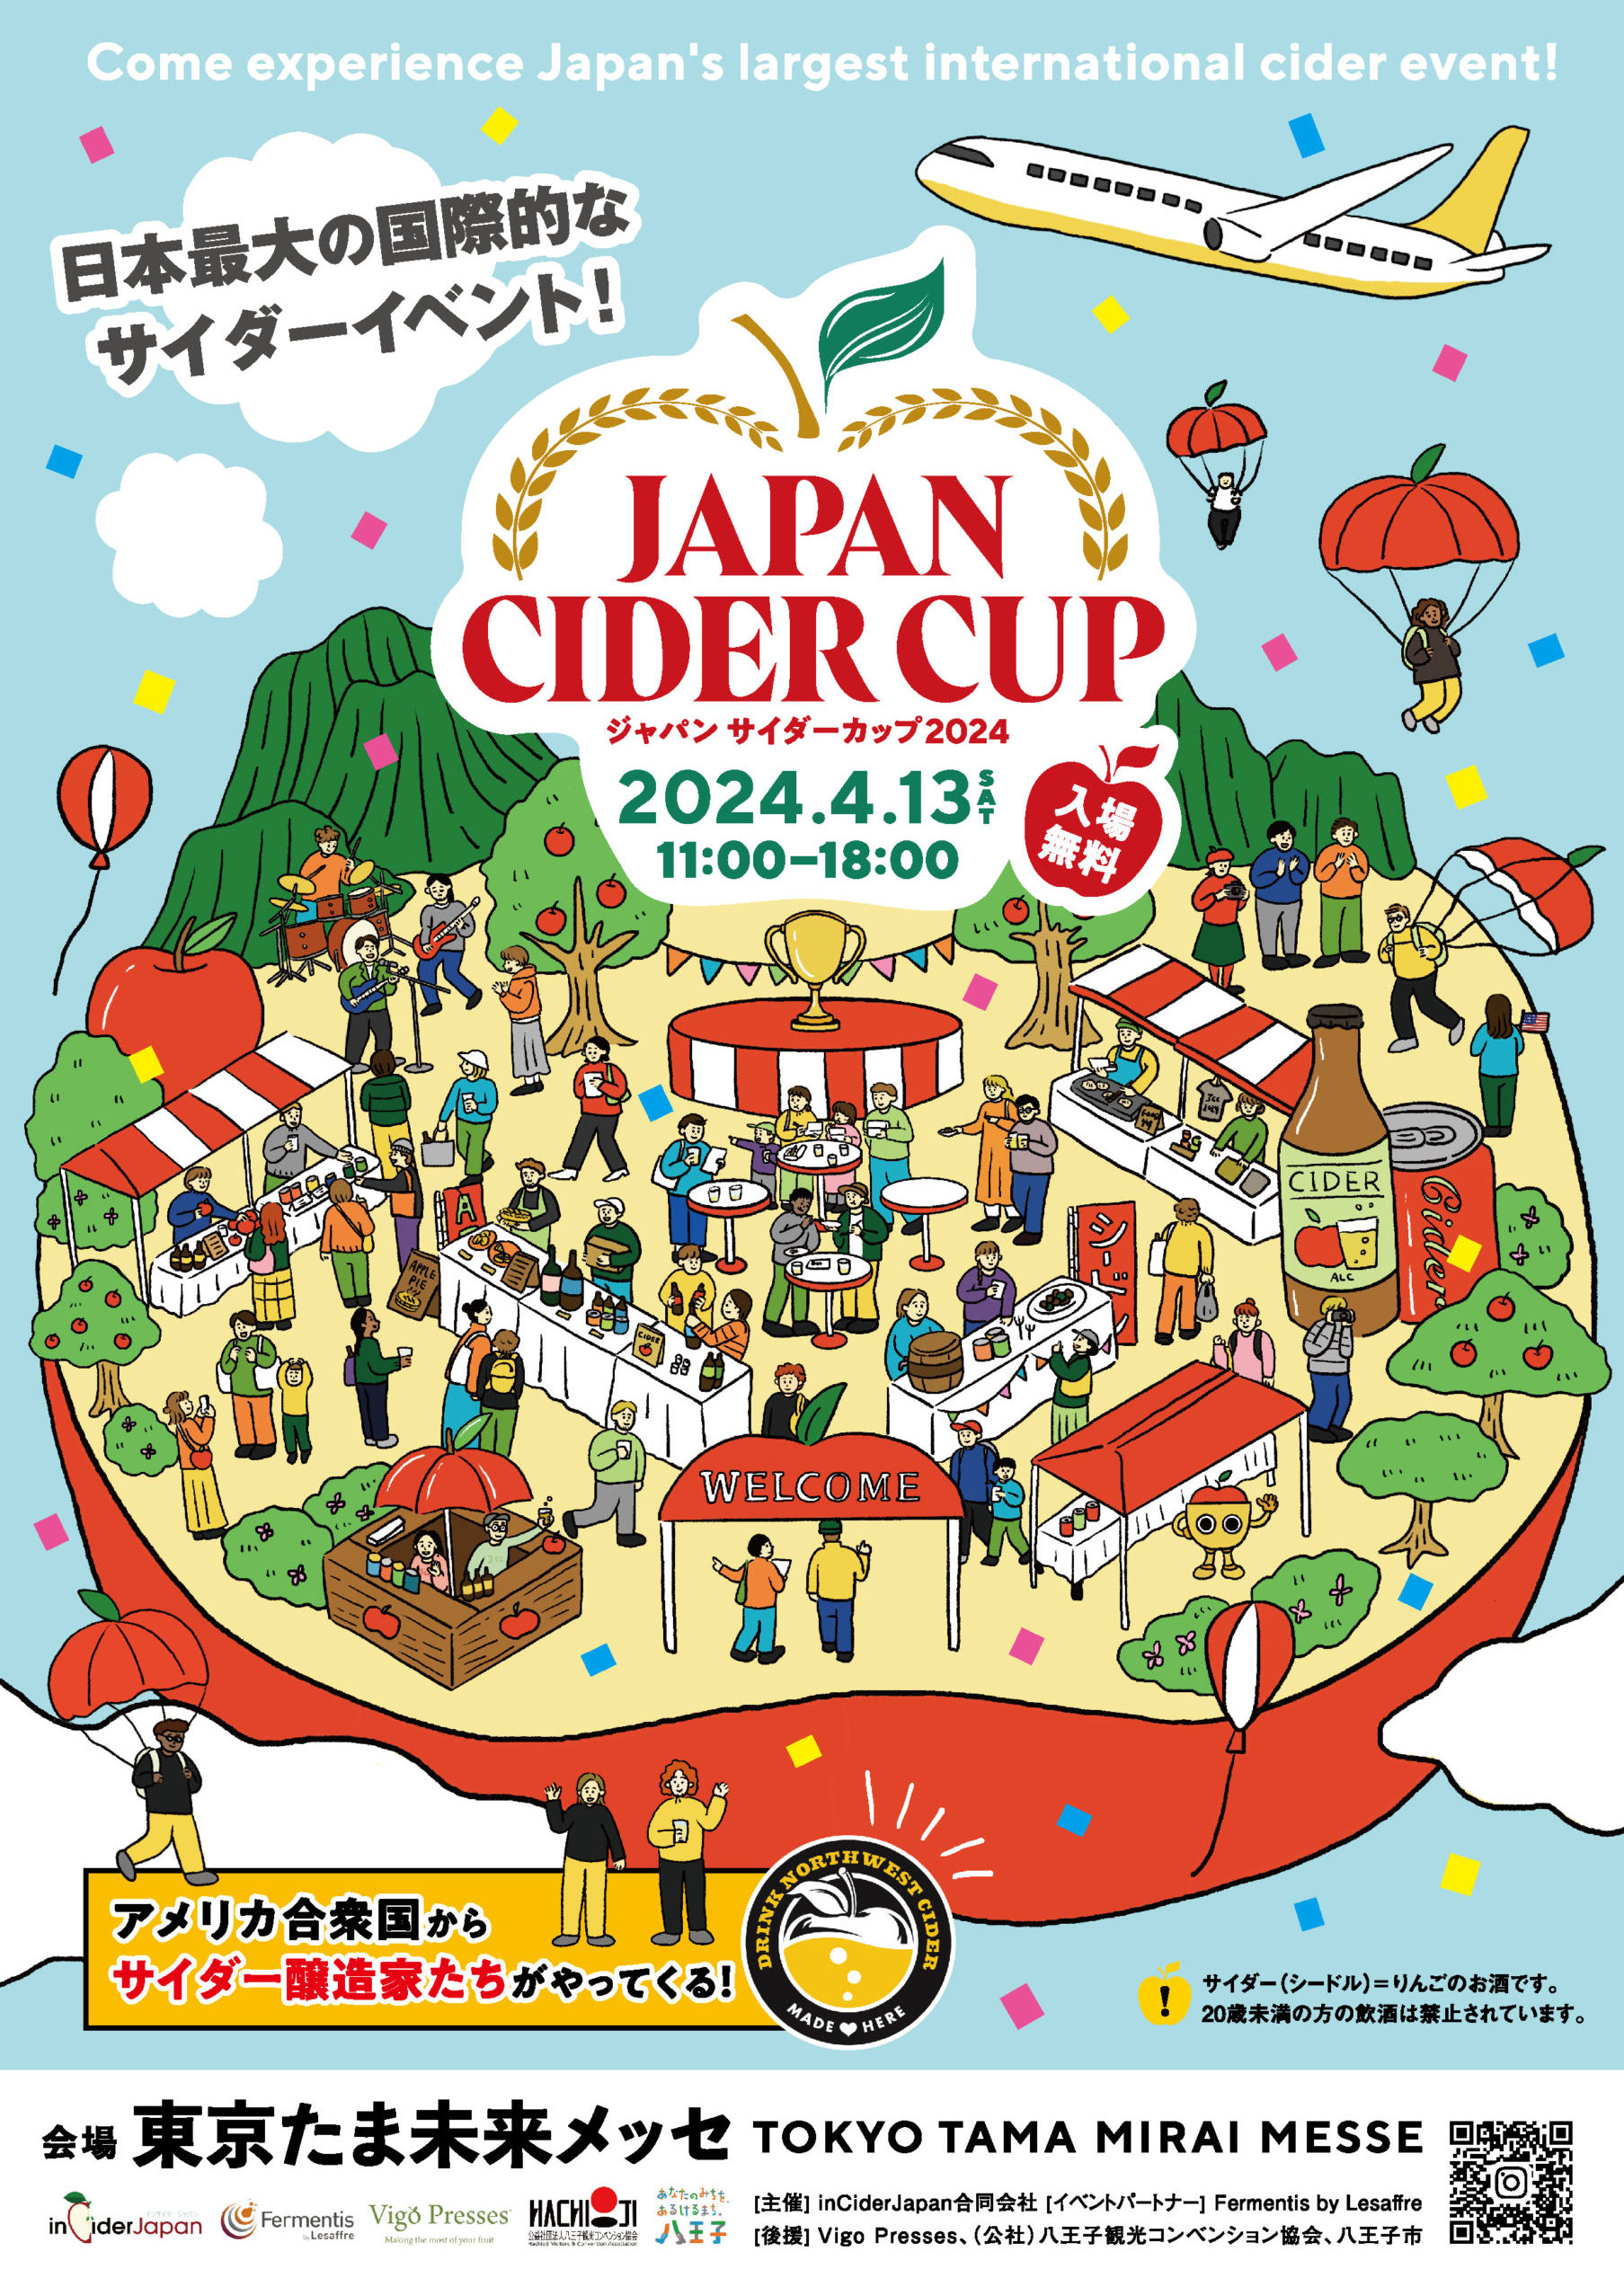 JAPAN CIDER CUP EVENT POSTER 2024